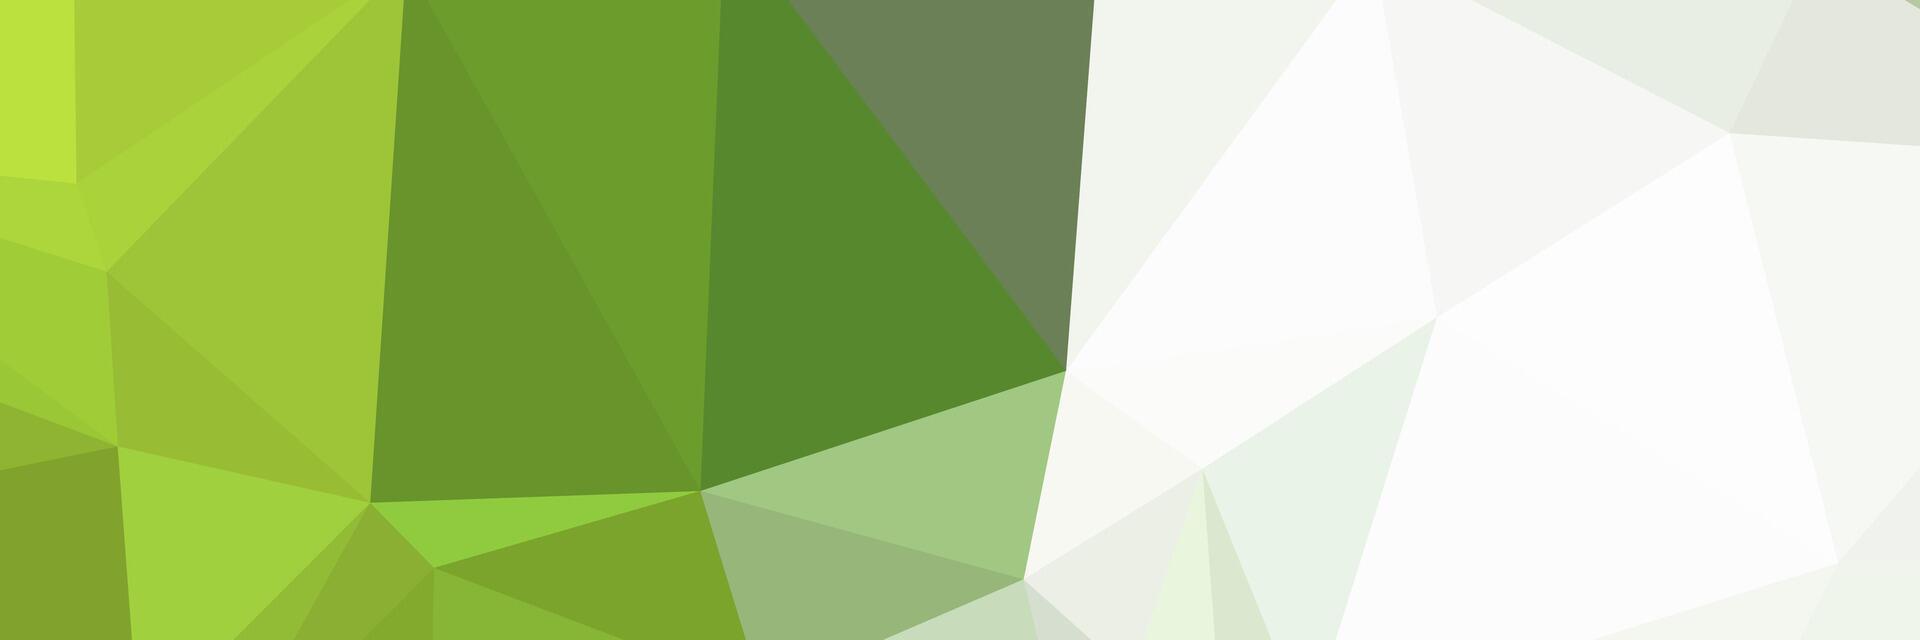 abstrato verde elegante geométrico fundo com branco espaço vetor